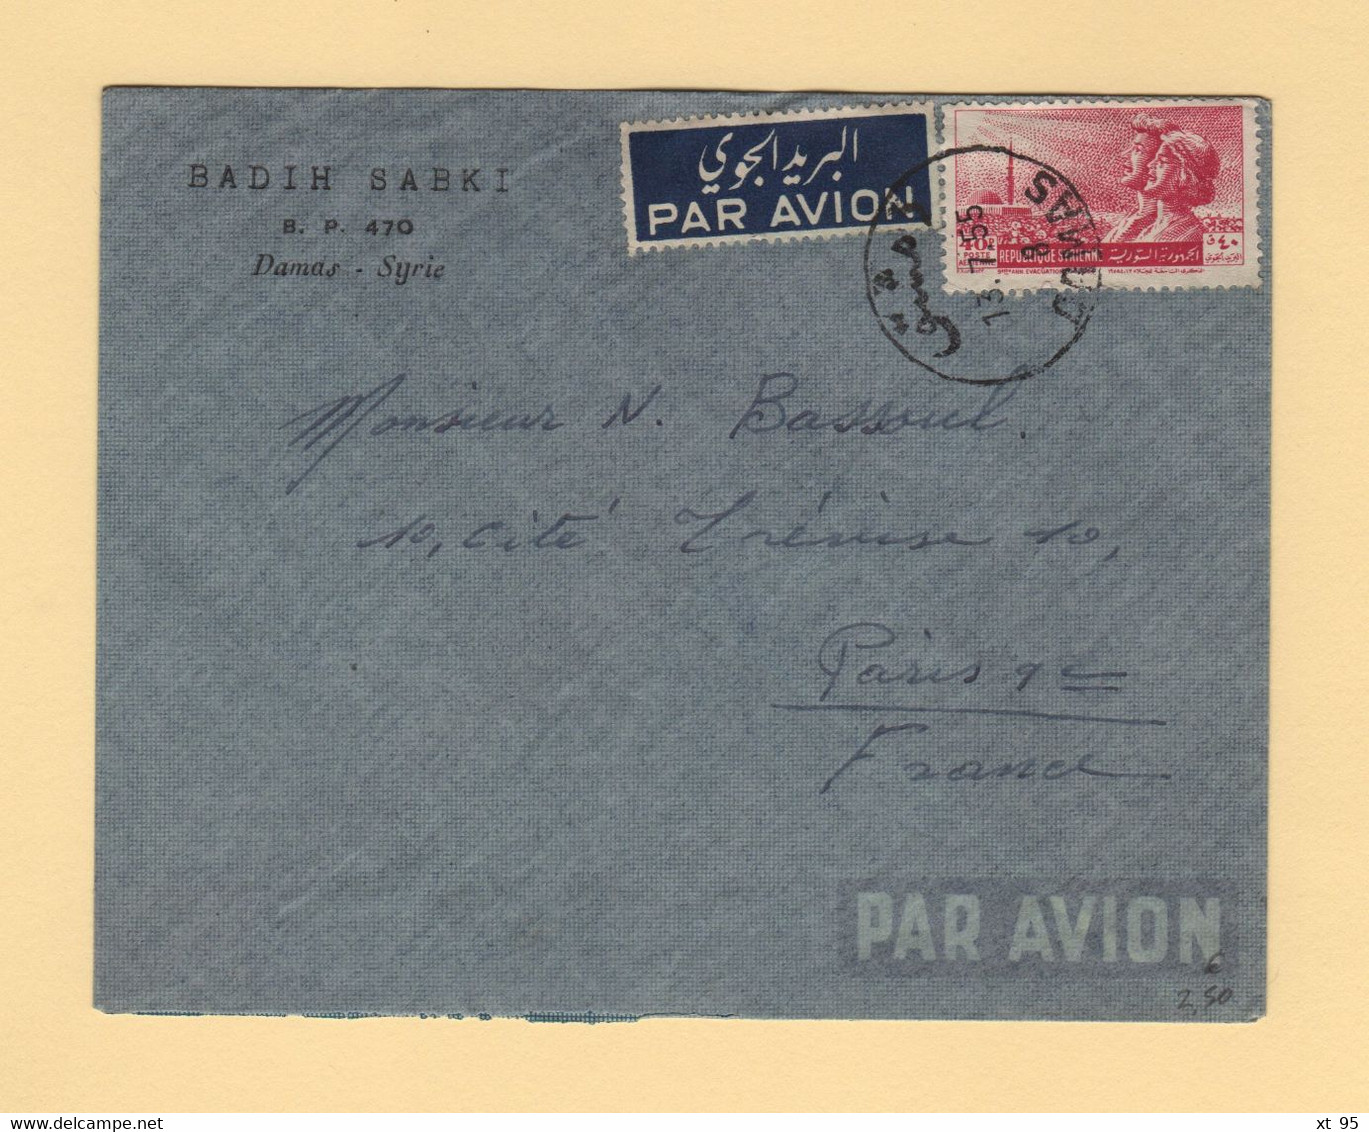 Syrie - Damas - 1955 - Par Avion Destination France - Syria